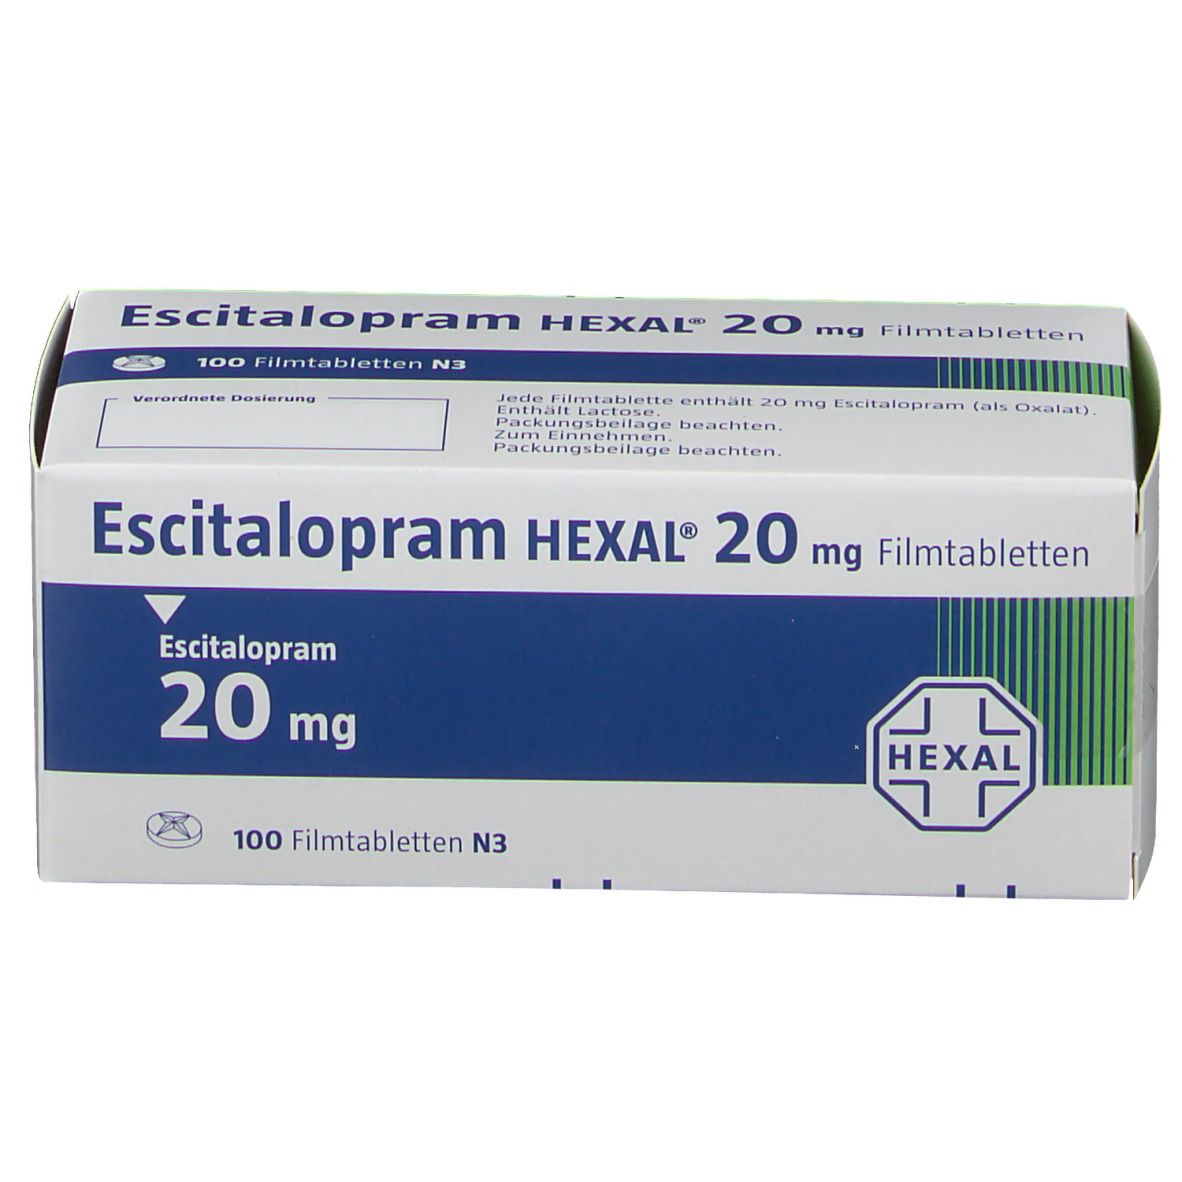 Escitalopram HEXAL® 20 mg